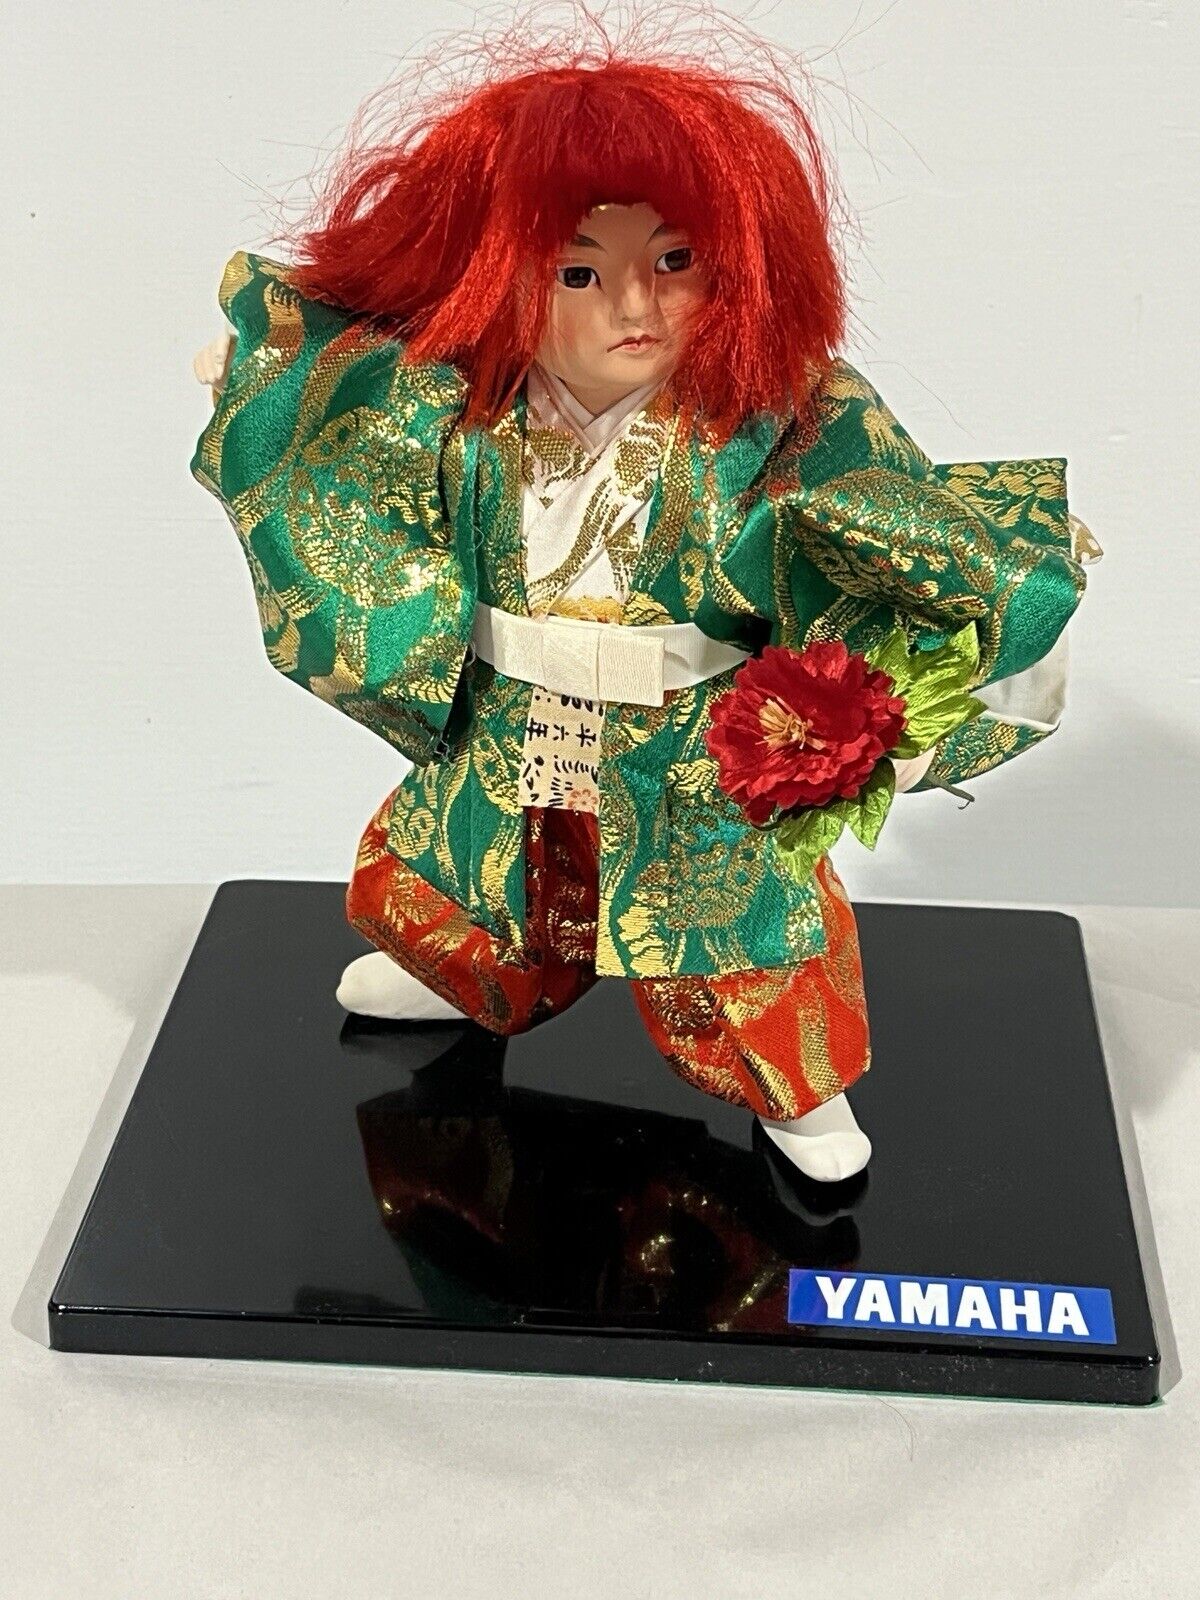 Yamaha Kyugetsu warrior Doll Japanese Made In Tokyo Japan Collectible . Red Hair